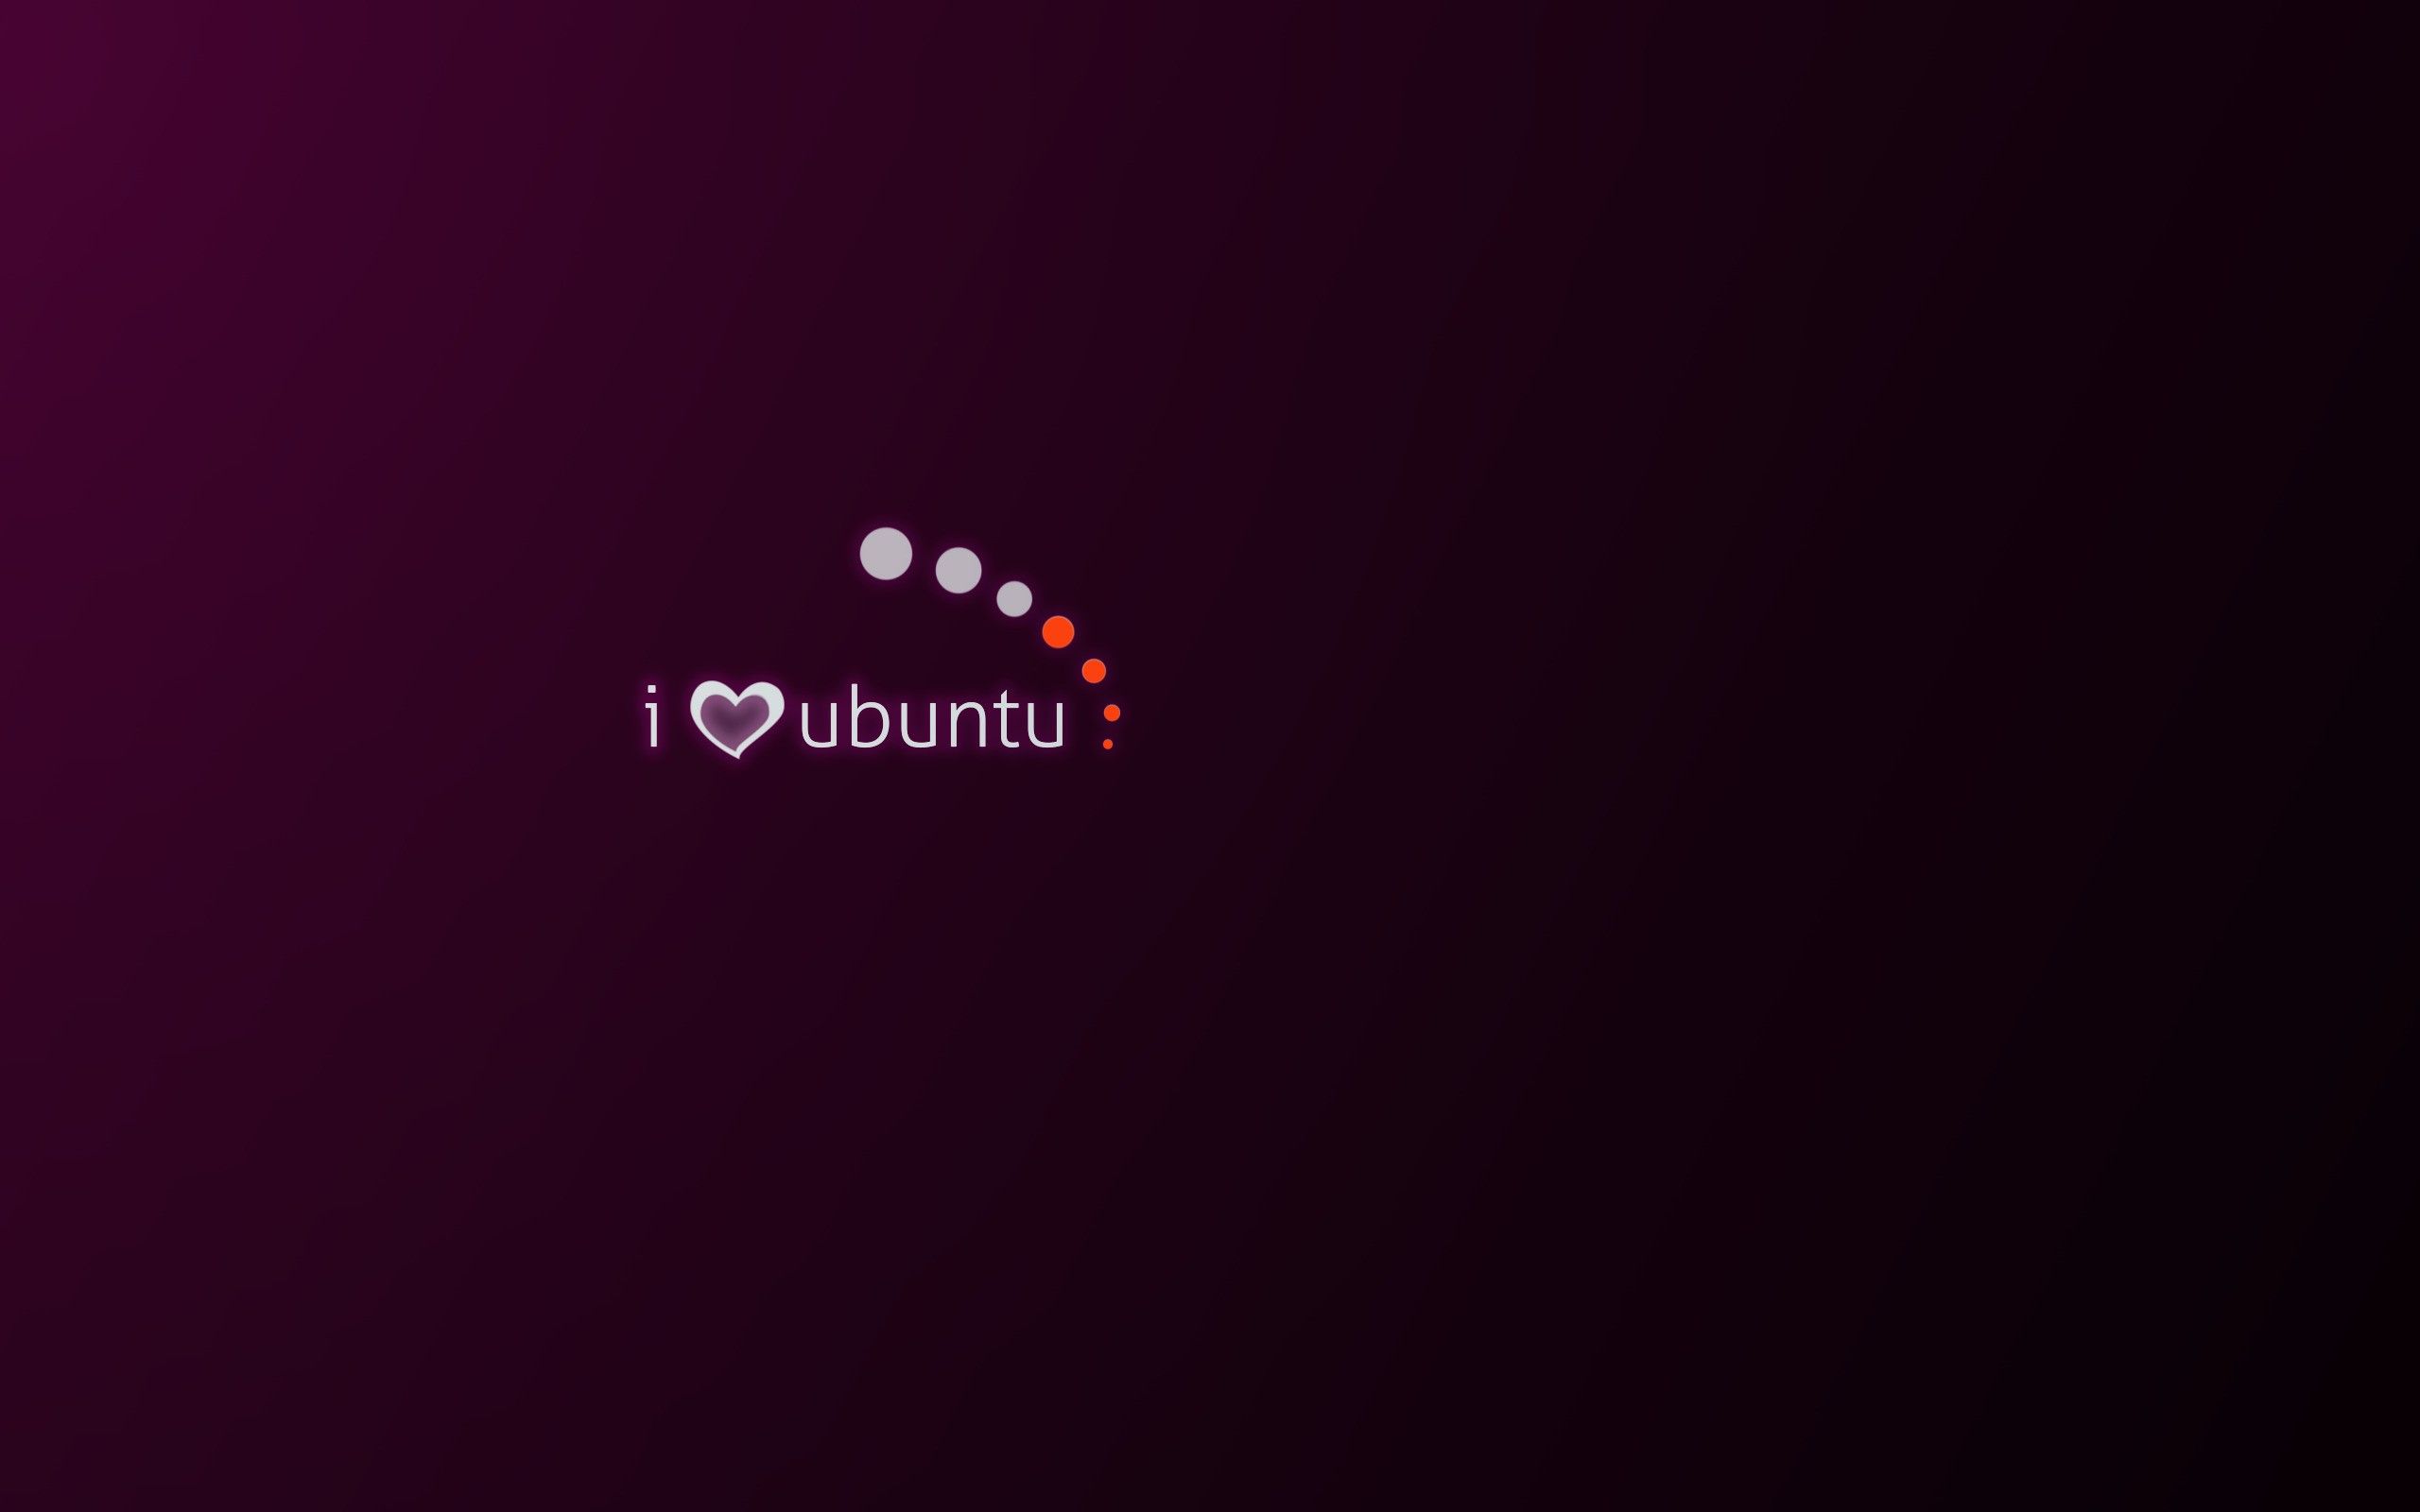 Pictures > ubuntu linux wallpaper hd